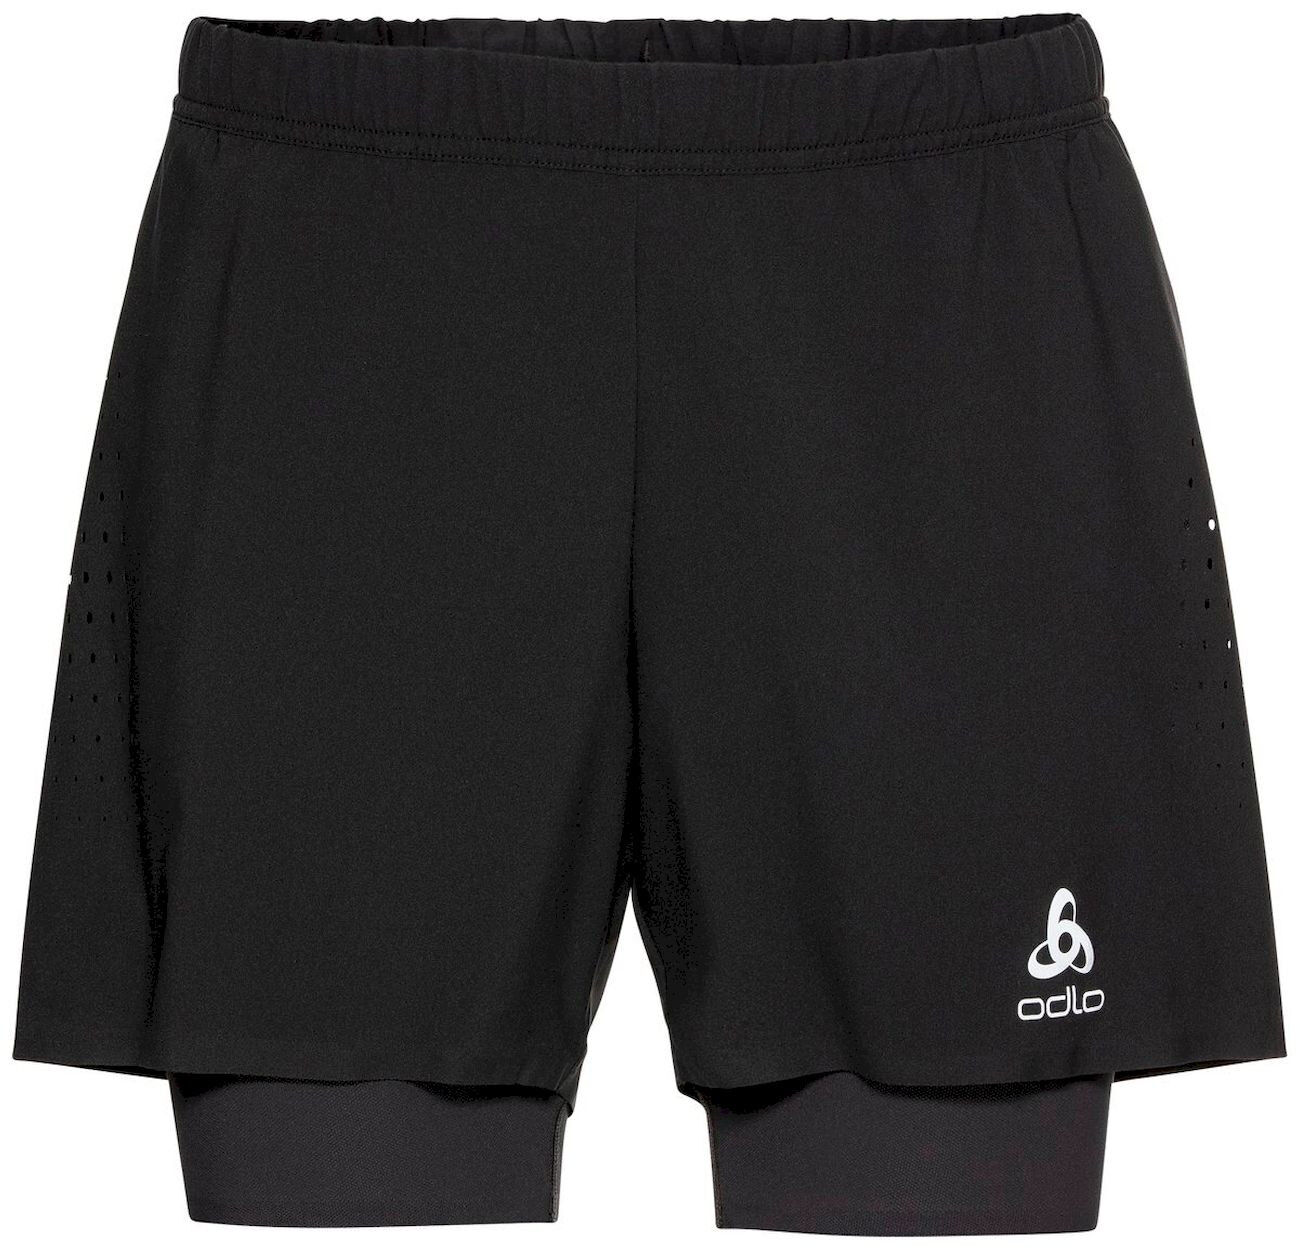 Odlo 2-In-1 Zeroweight 5 Inch - Running shorts